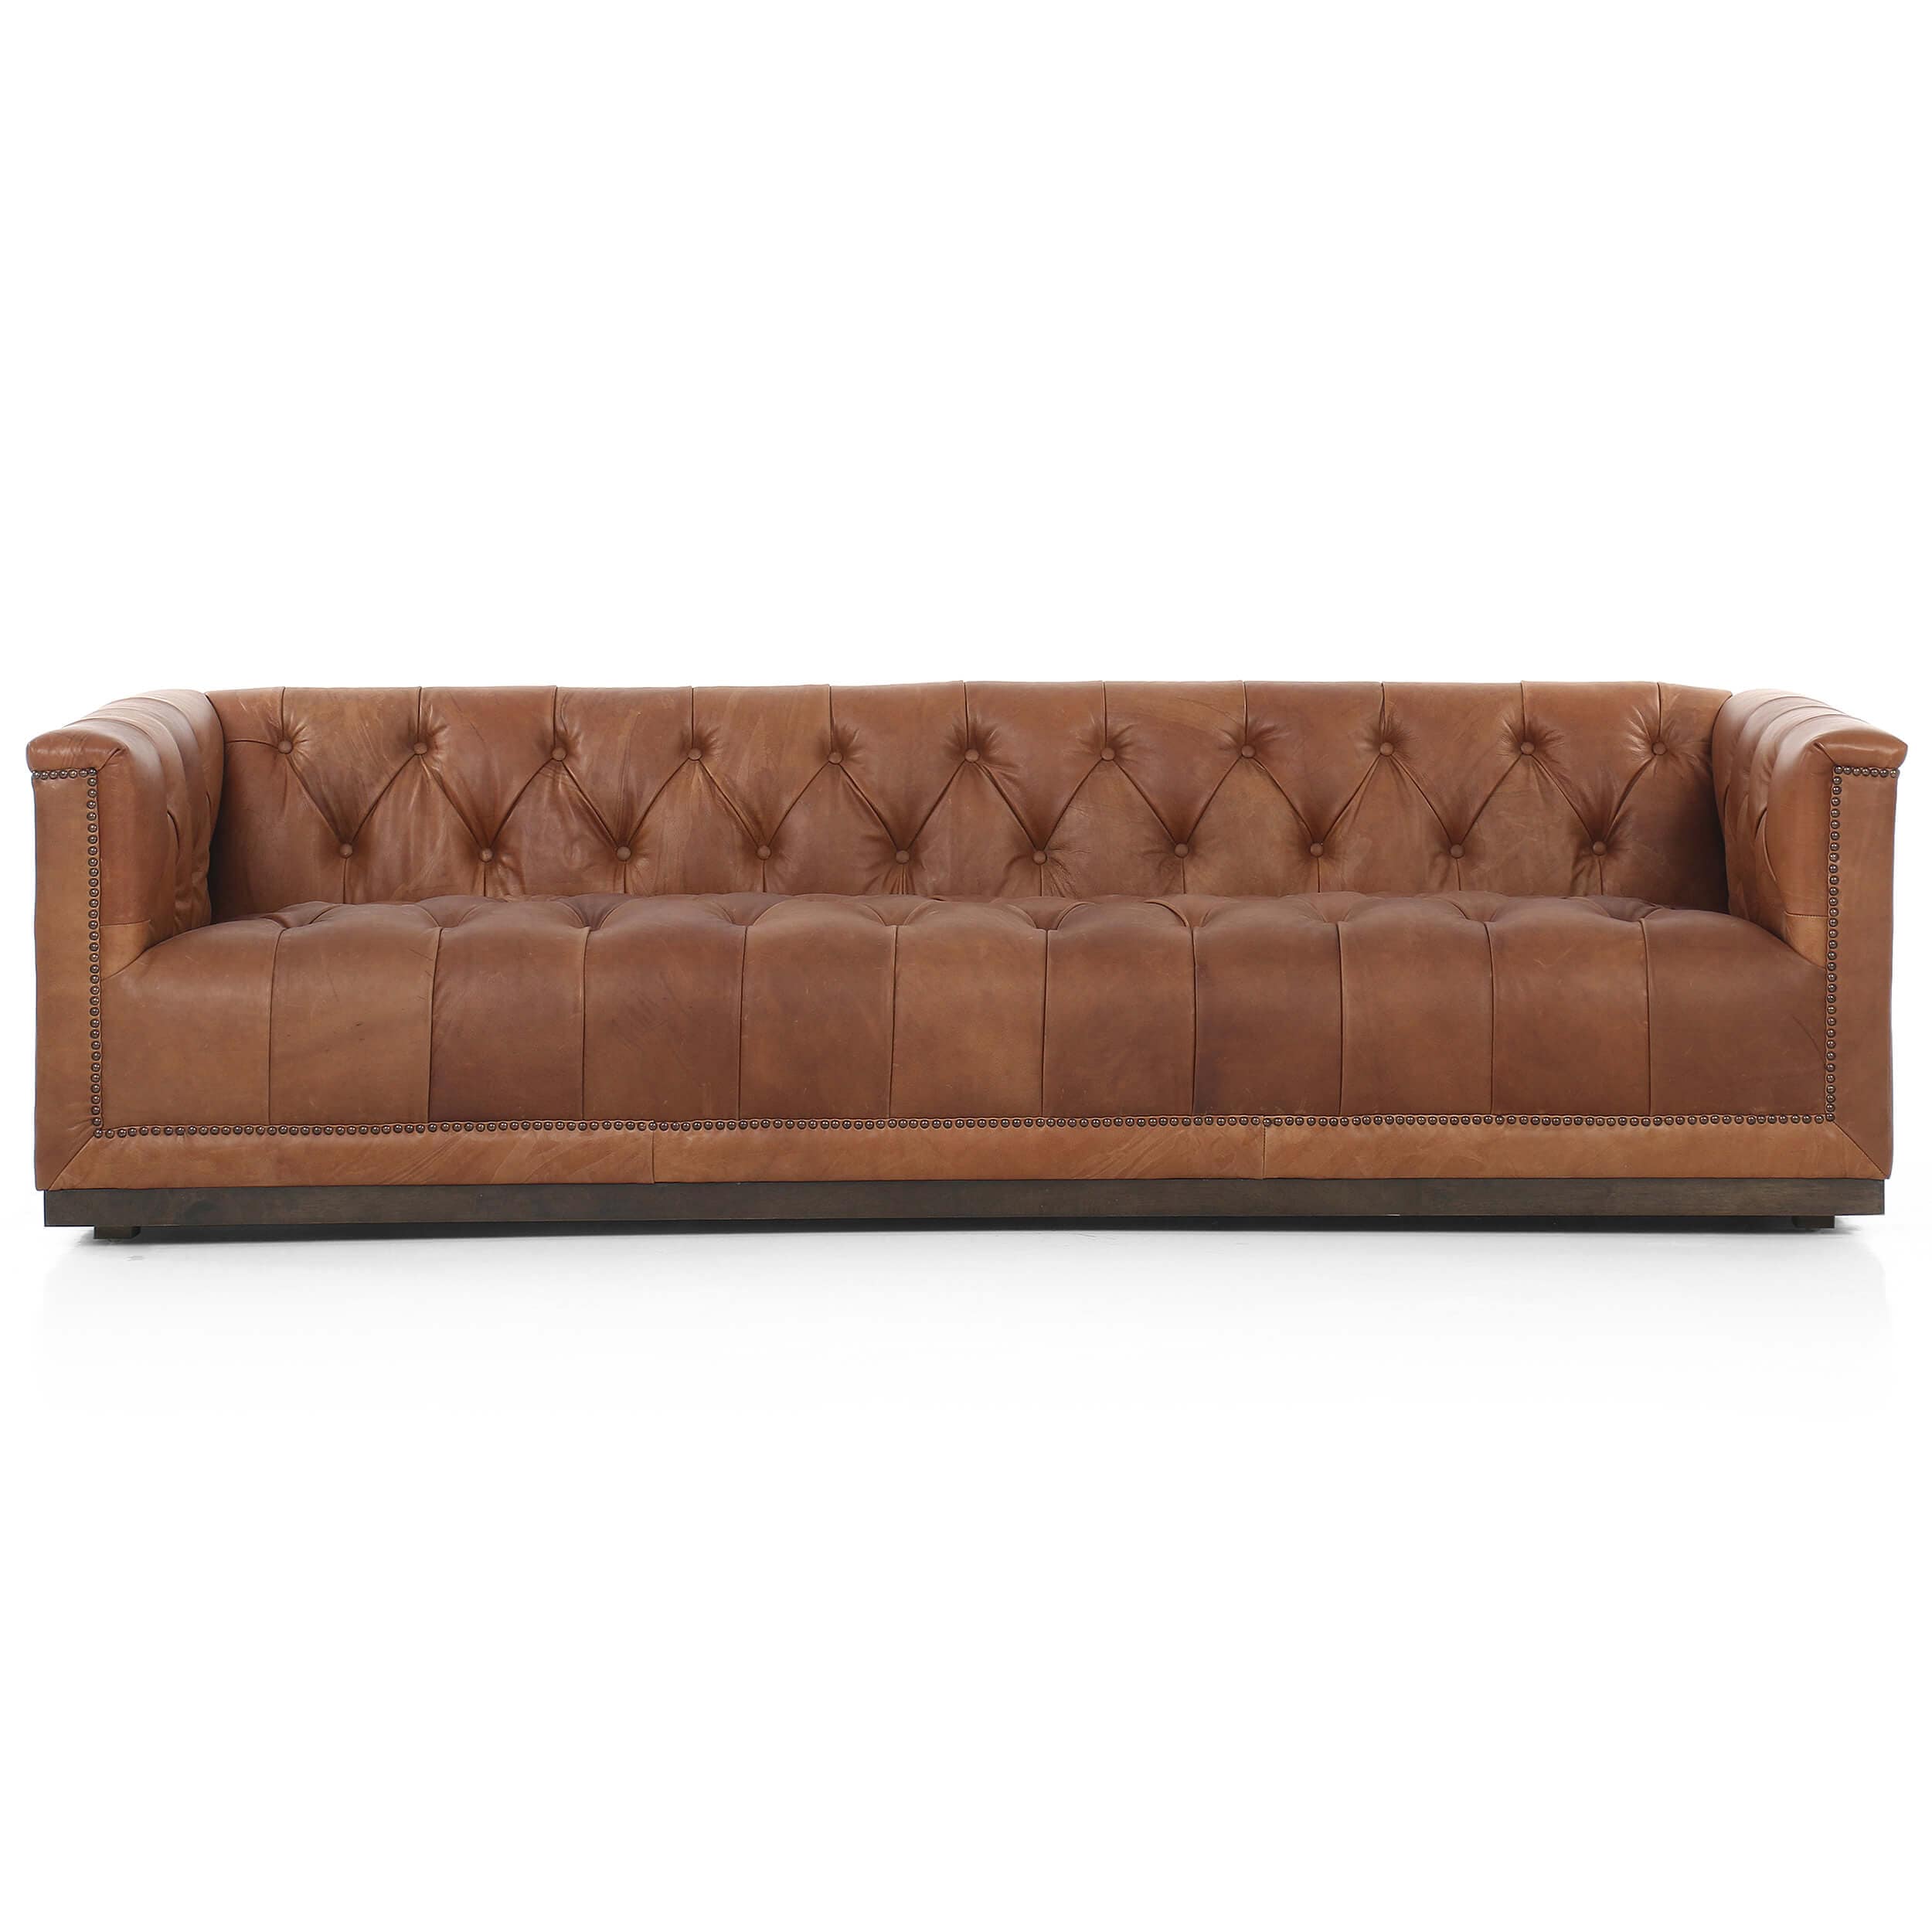 Image of Maxx Leather Sofa, Heirloom Sienna